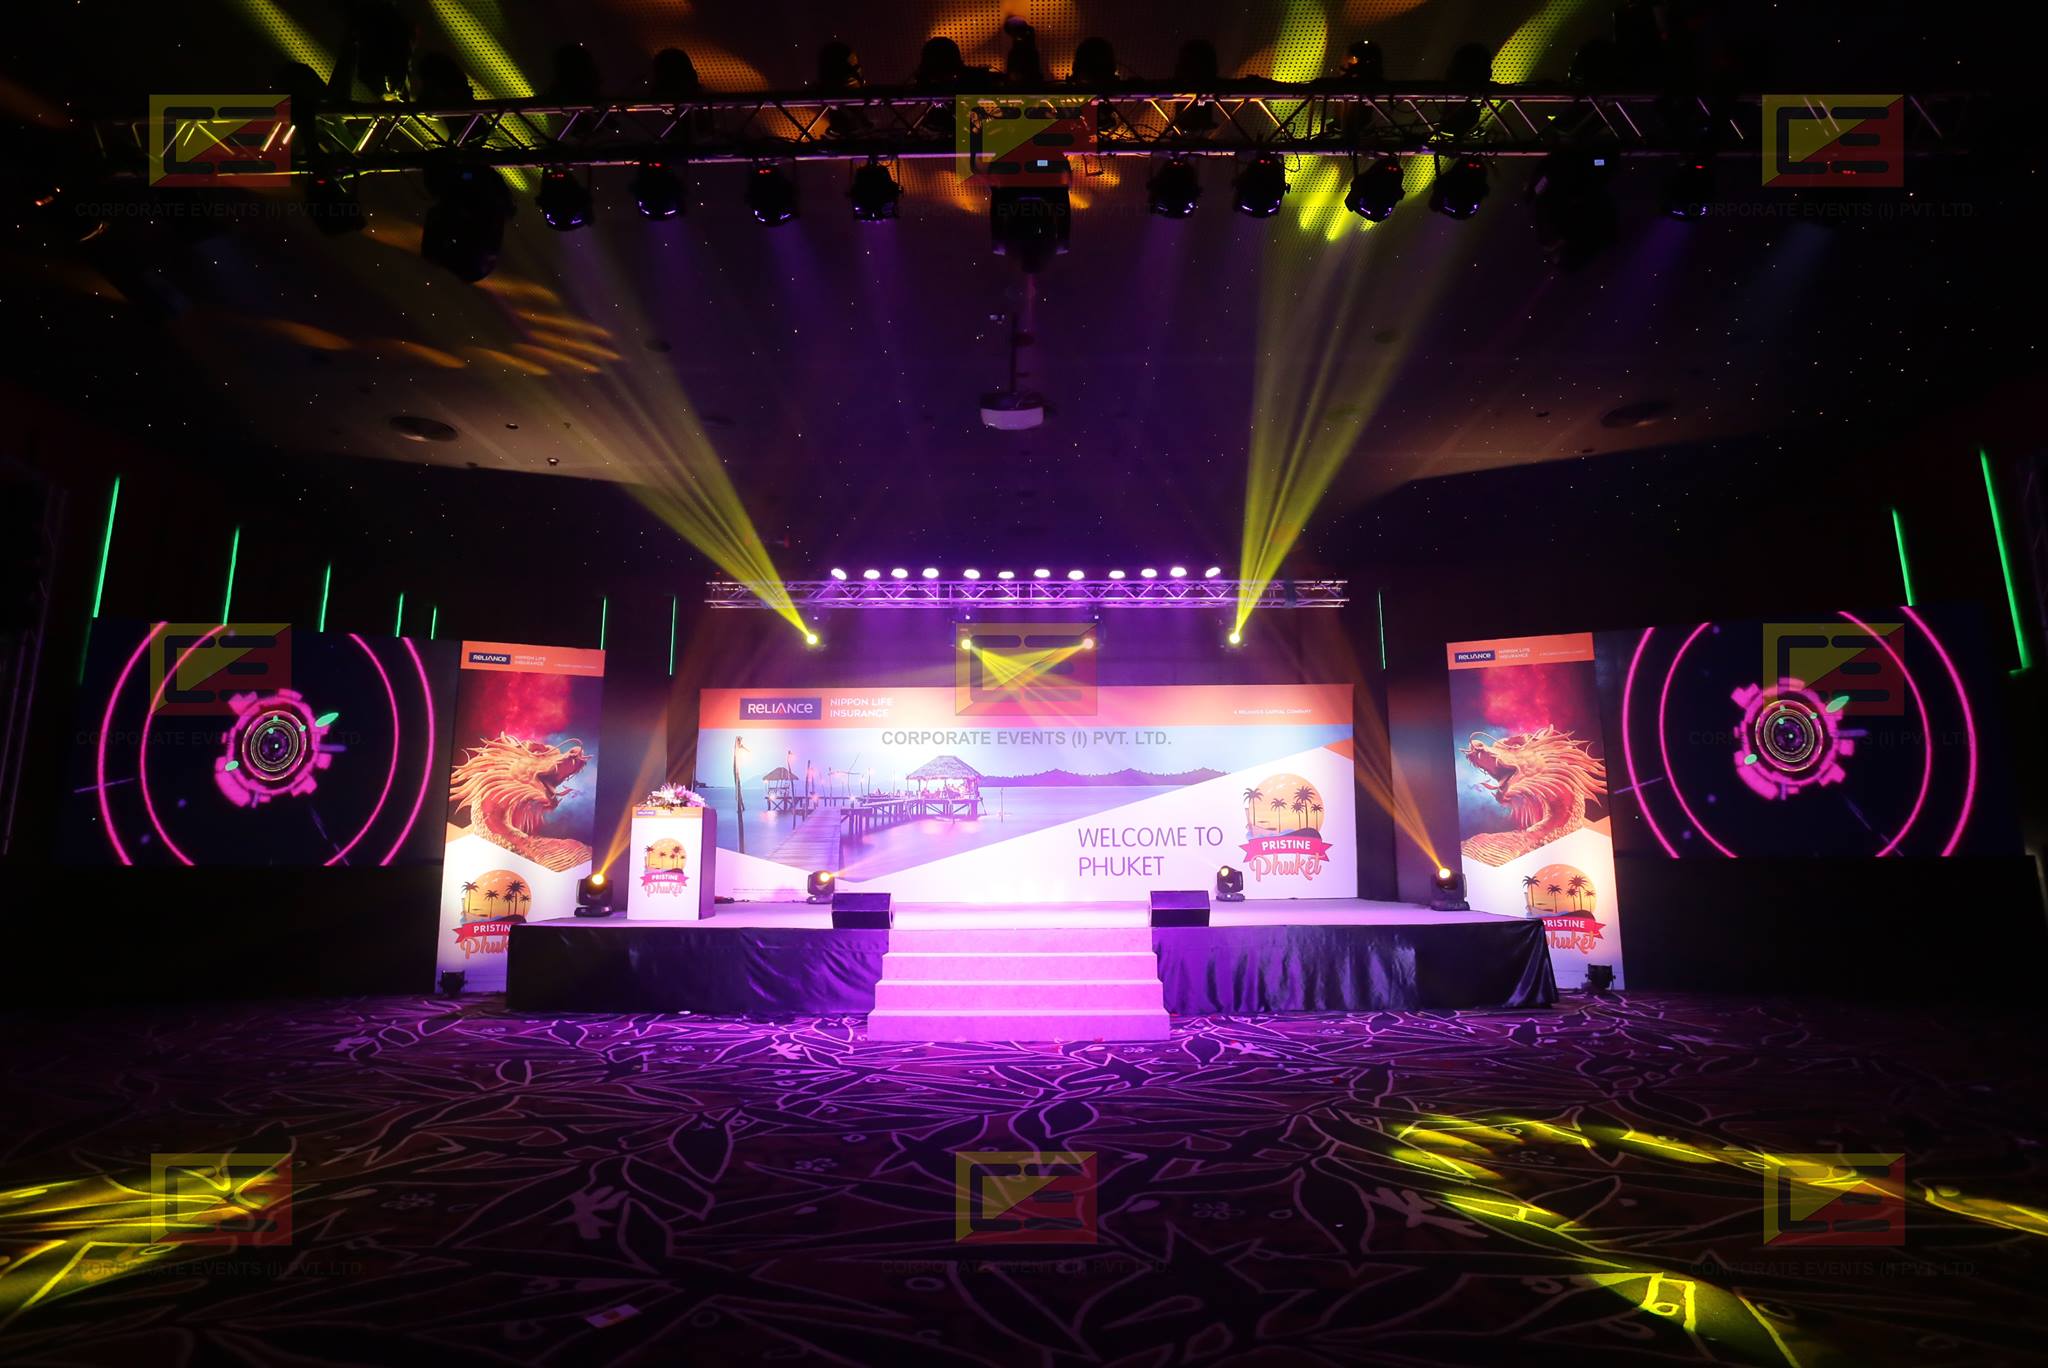 KWP Kochi Event Management corporate event management